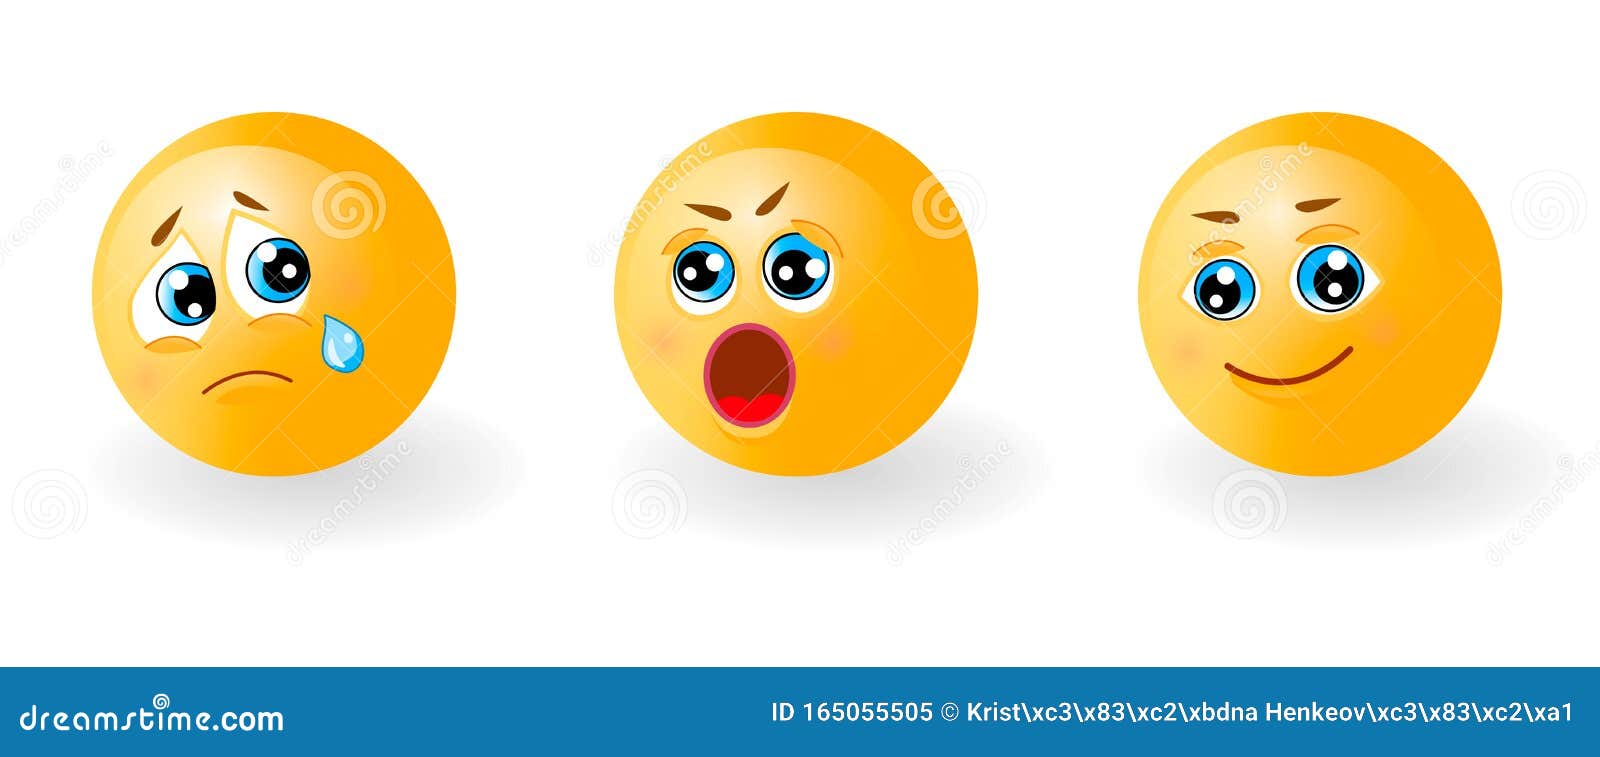 Conjunto de ícones de emoji rostos símbolos de humor emoticon fofos  sorrindo feliz, alegre, triste e com raiva